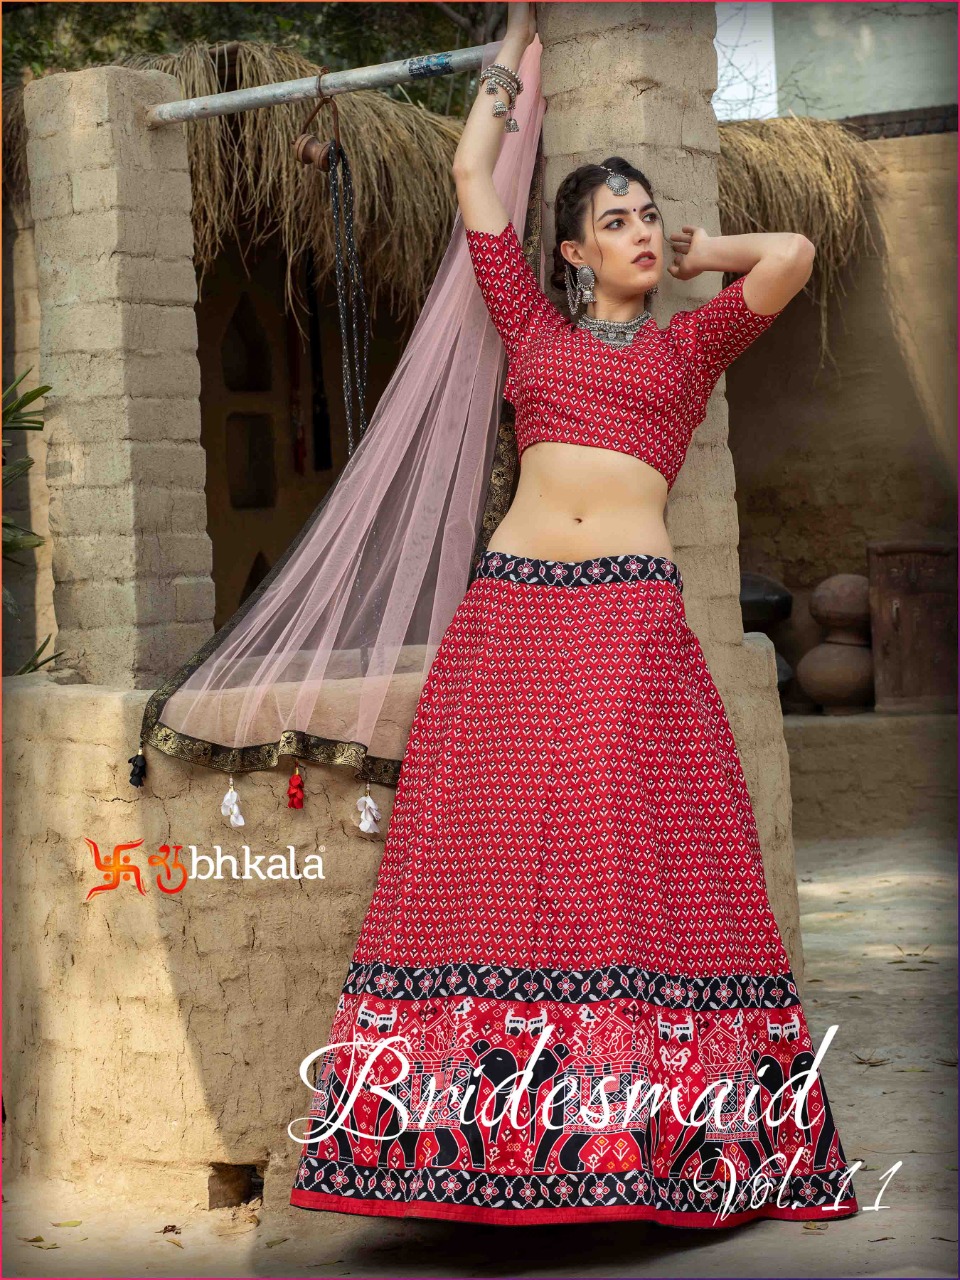 Subhkala Presents Bridesmaid Vol-11 Fancy Digital Printed Lehenga Choli Catalog Wholesaler And Exporters